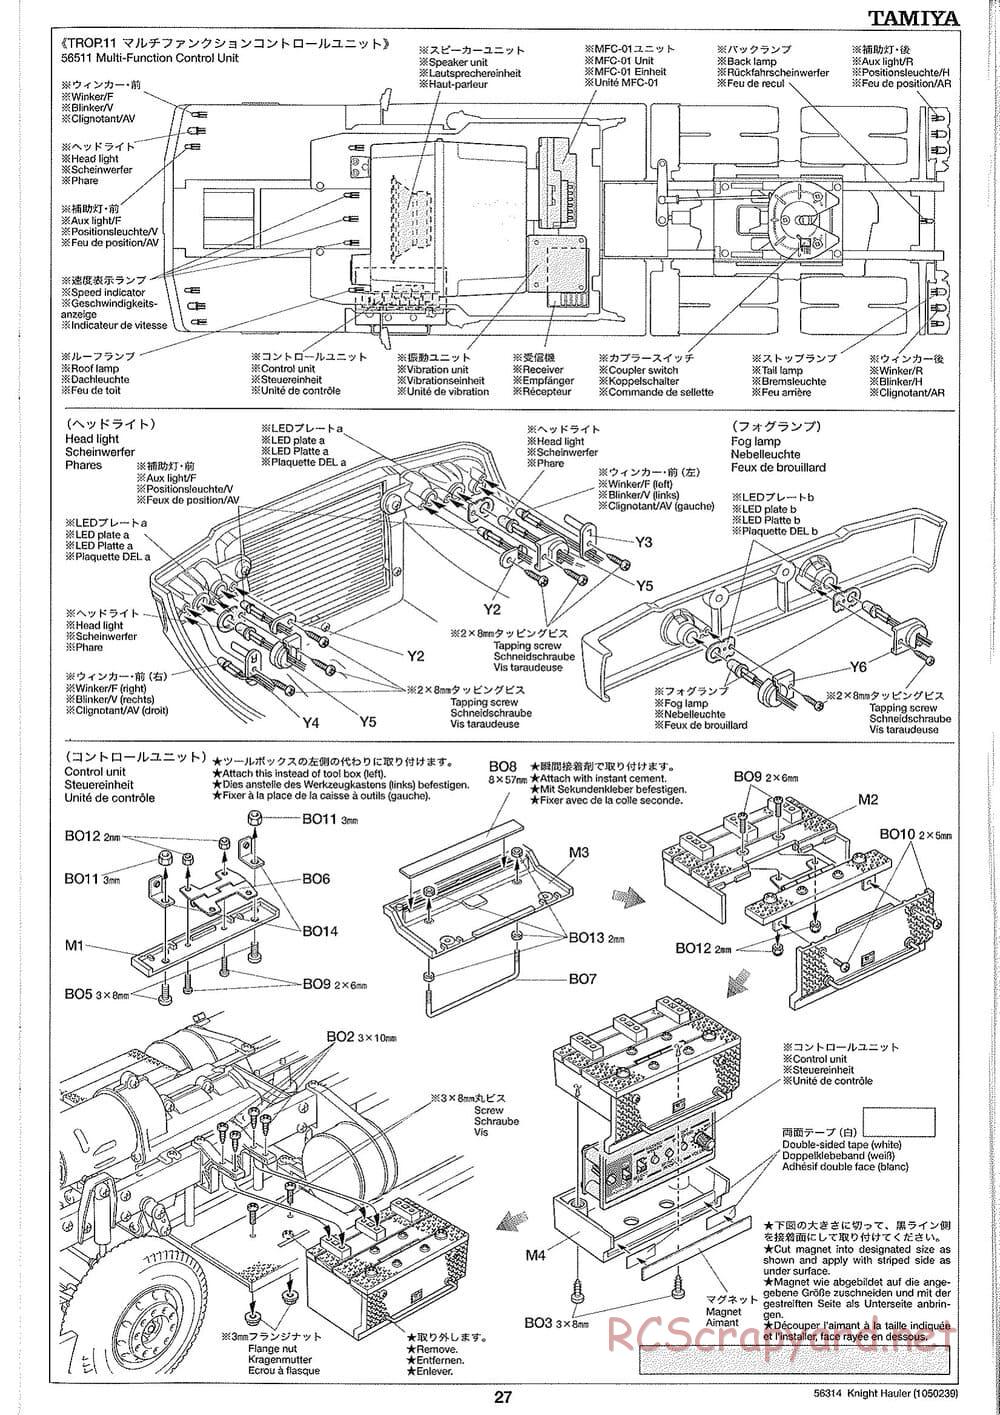 Tamiya - Knight Hauler Tractor Truck Chassis - Manual - Page 27